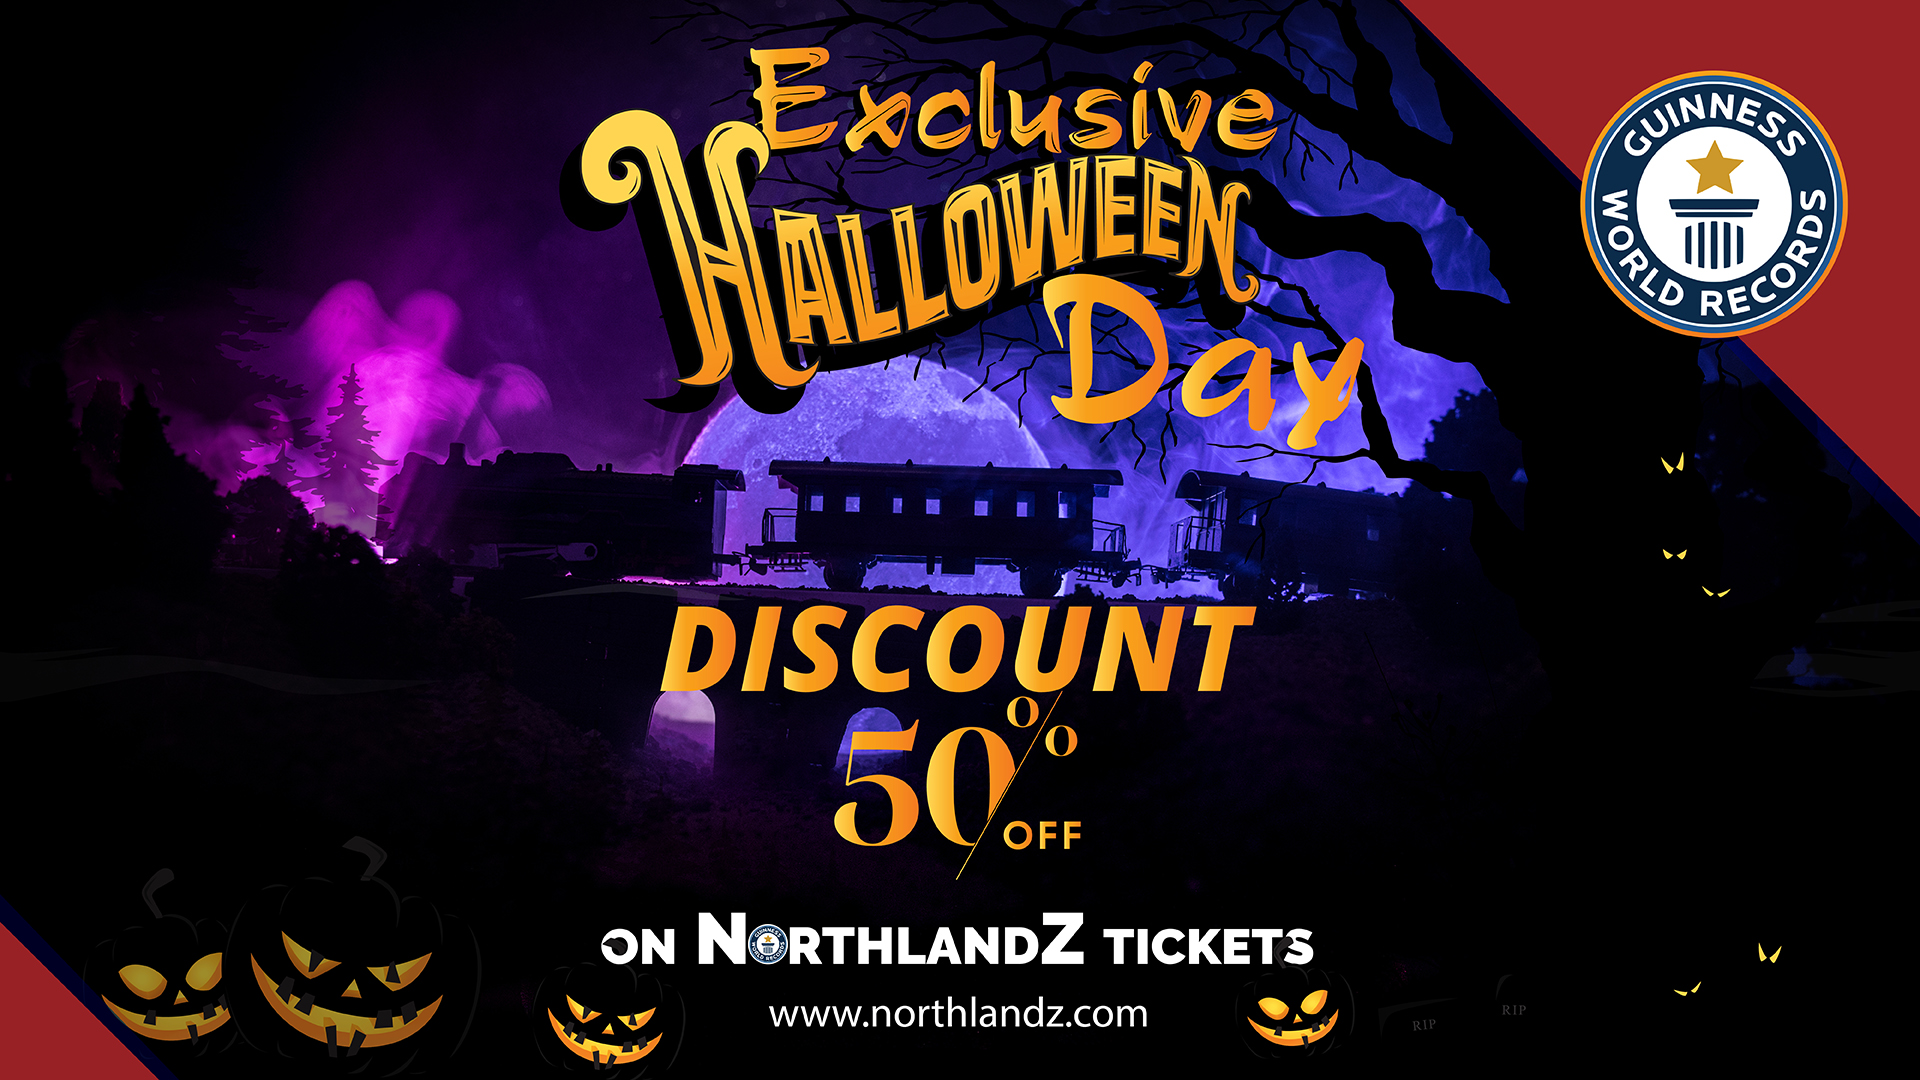 Exclusive Halloween Day Discount 50% off on Northlandz Tickets